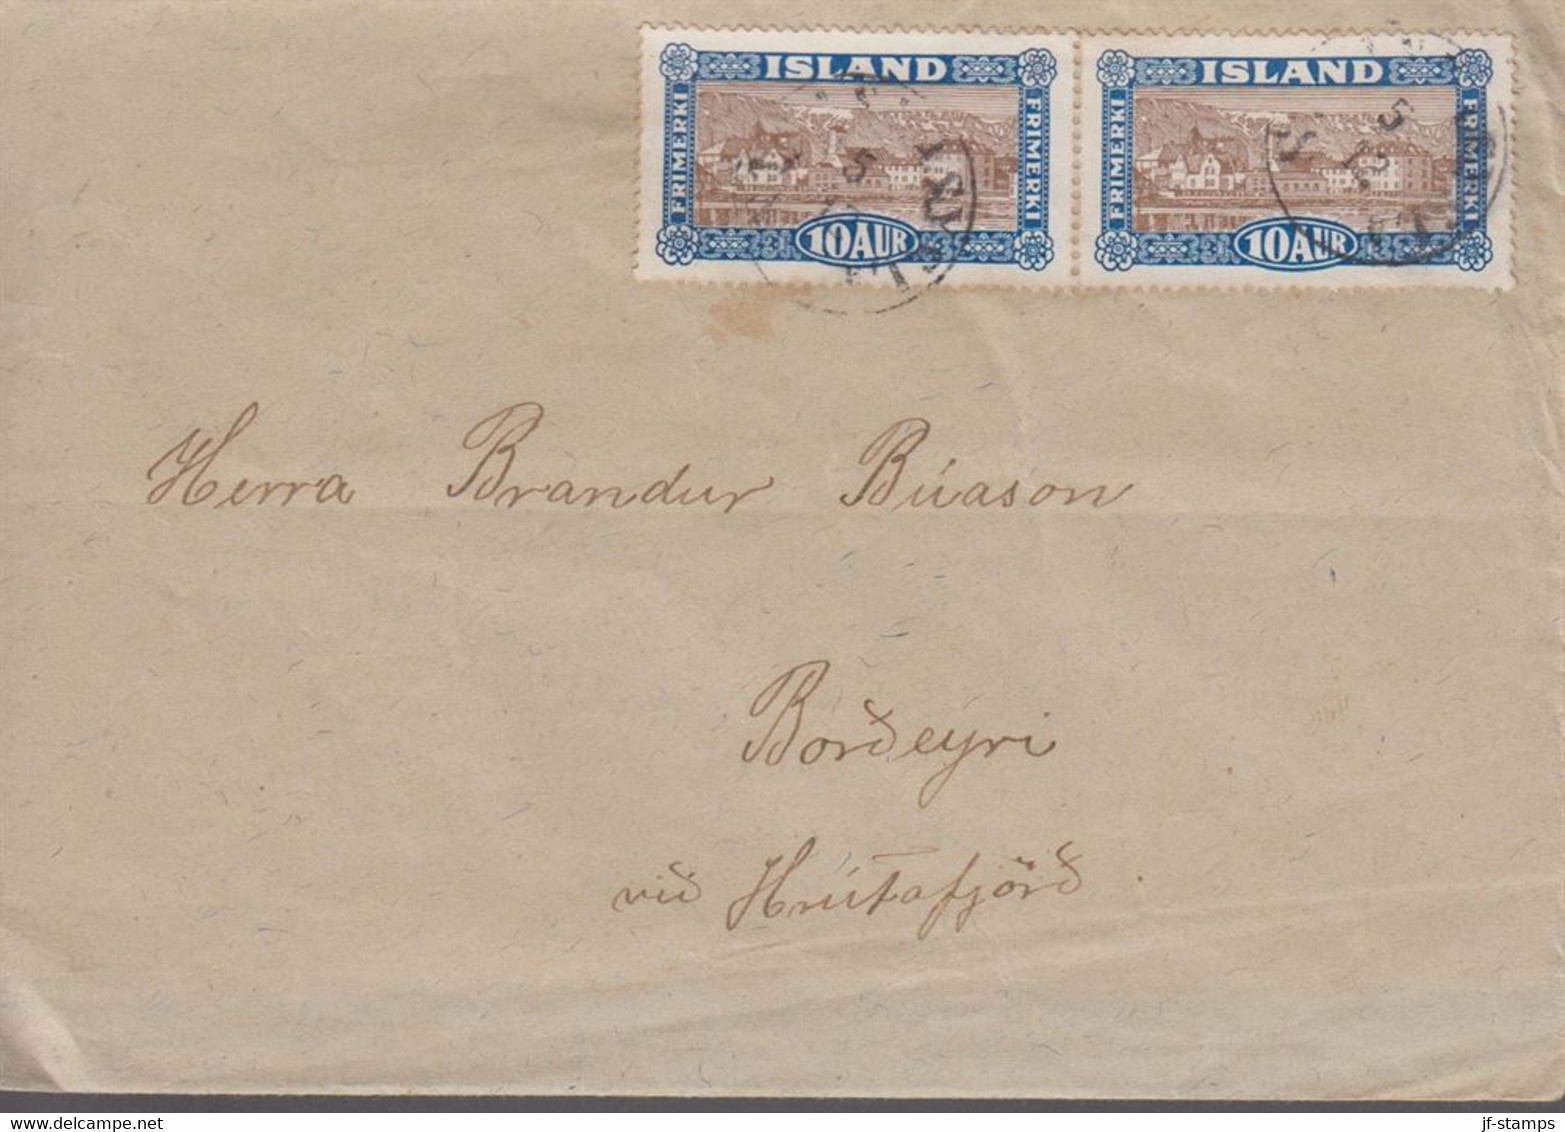 1925. Views And Buildings. 10 Aur Brown/blue 2 Ex STRANDASYSLA 5 12. (Michel 115) - JF366949 - Briefe U. Dokumente